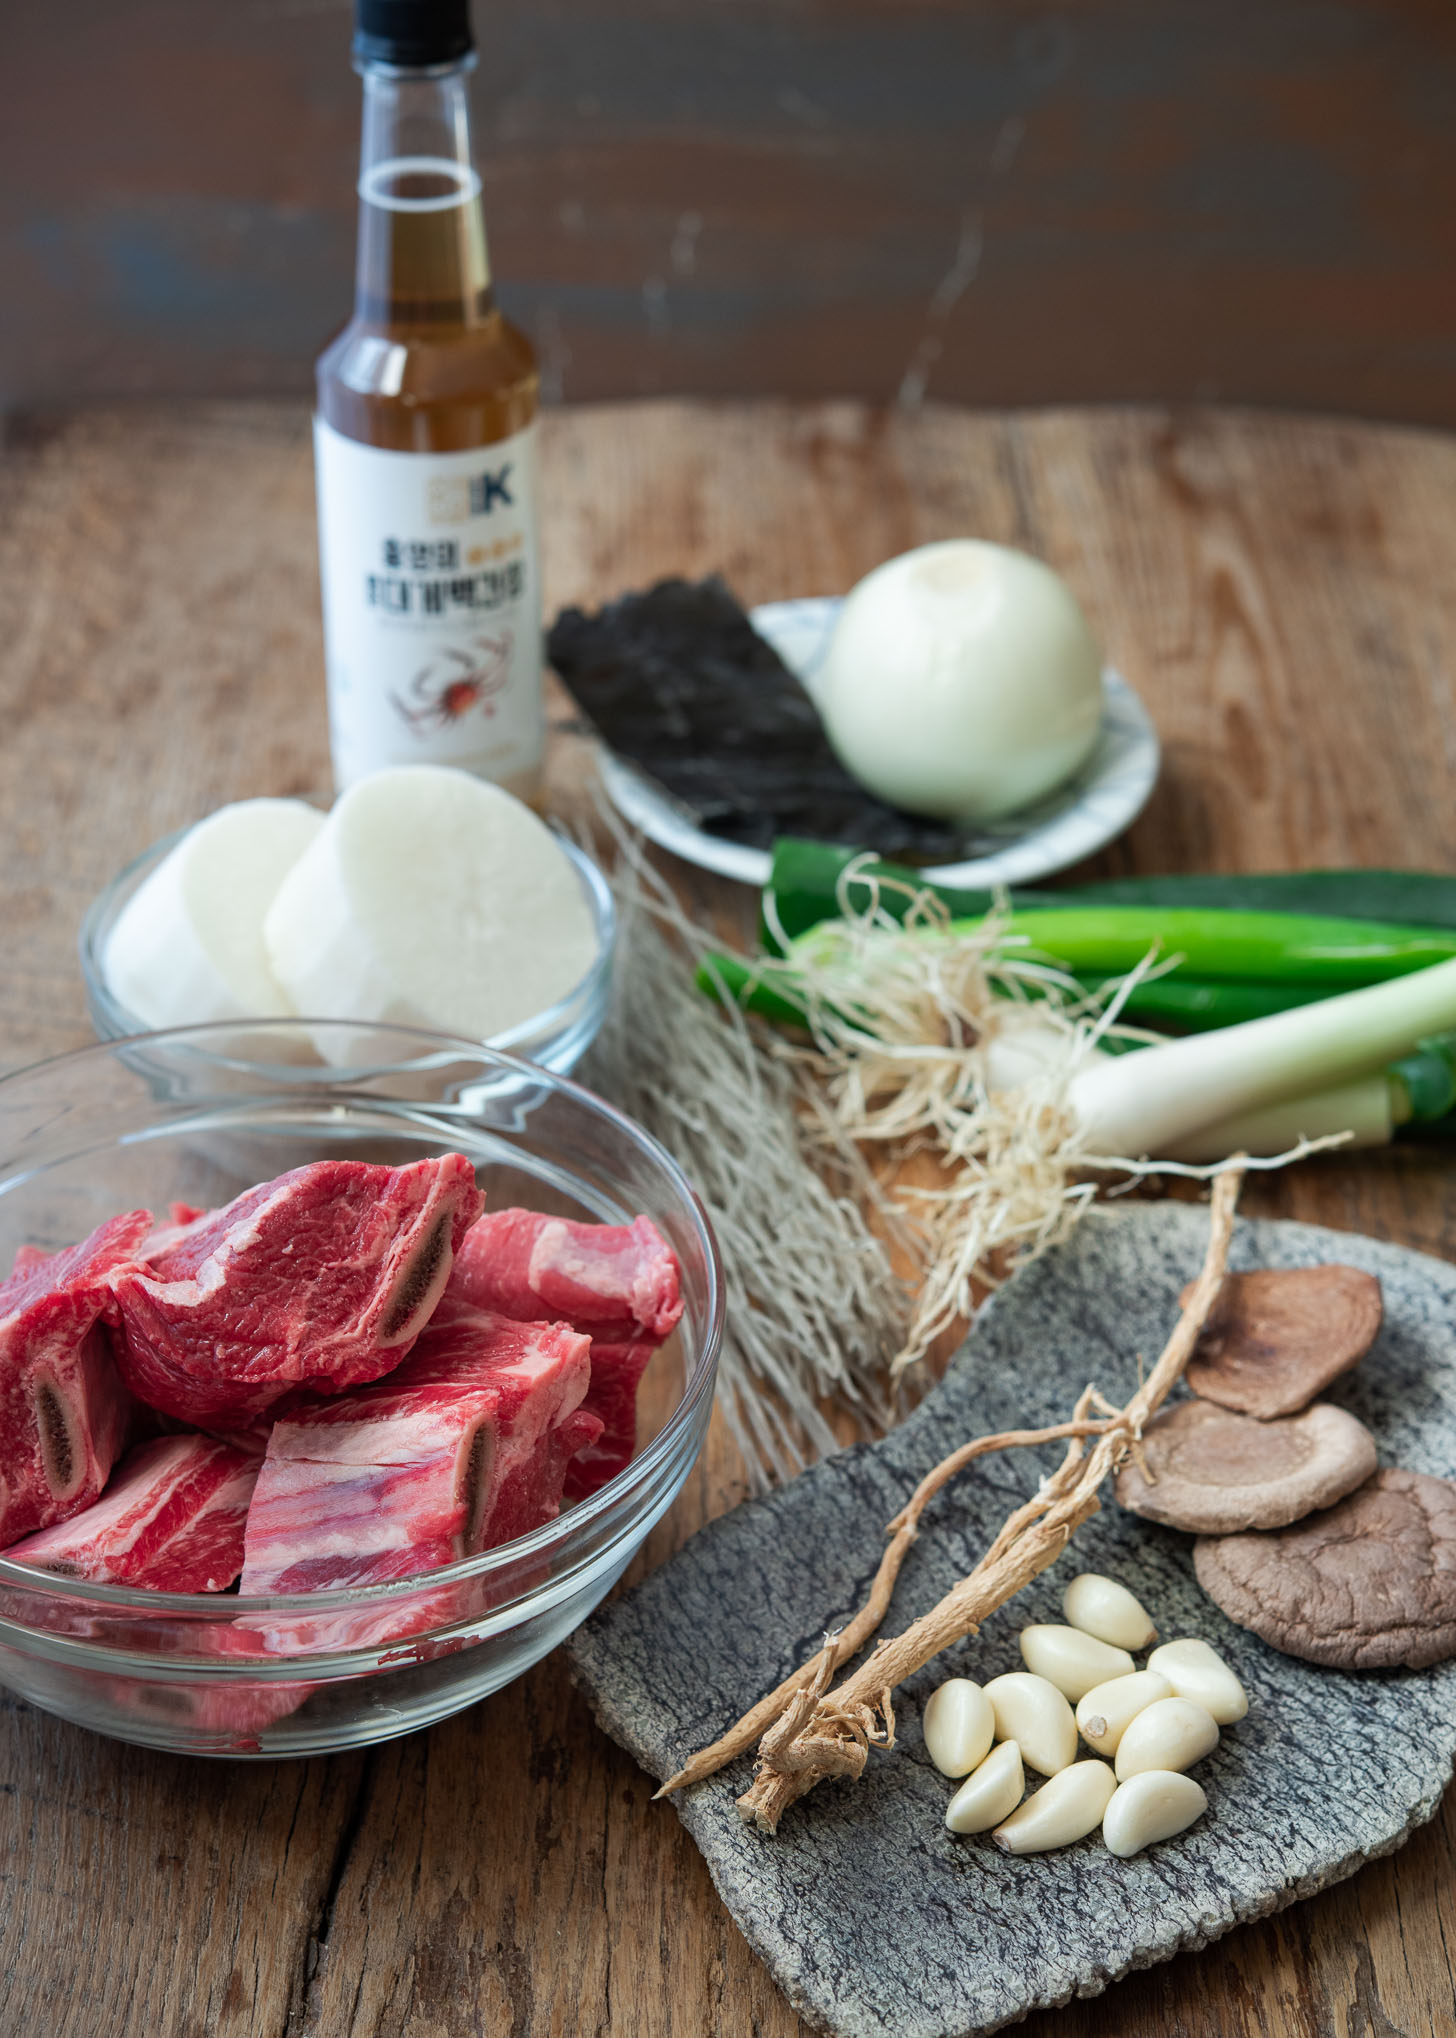 Ingredients for making galbitang, aka Korean beef short ribs soup, are presenting.